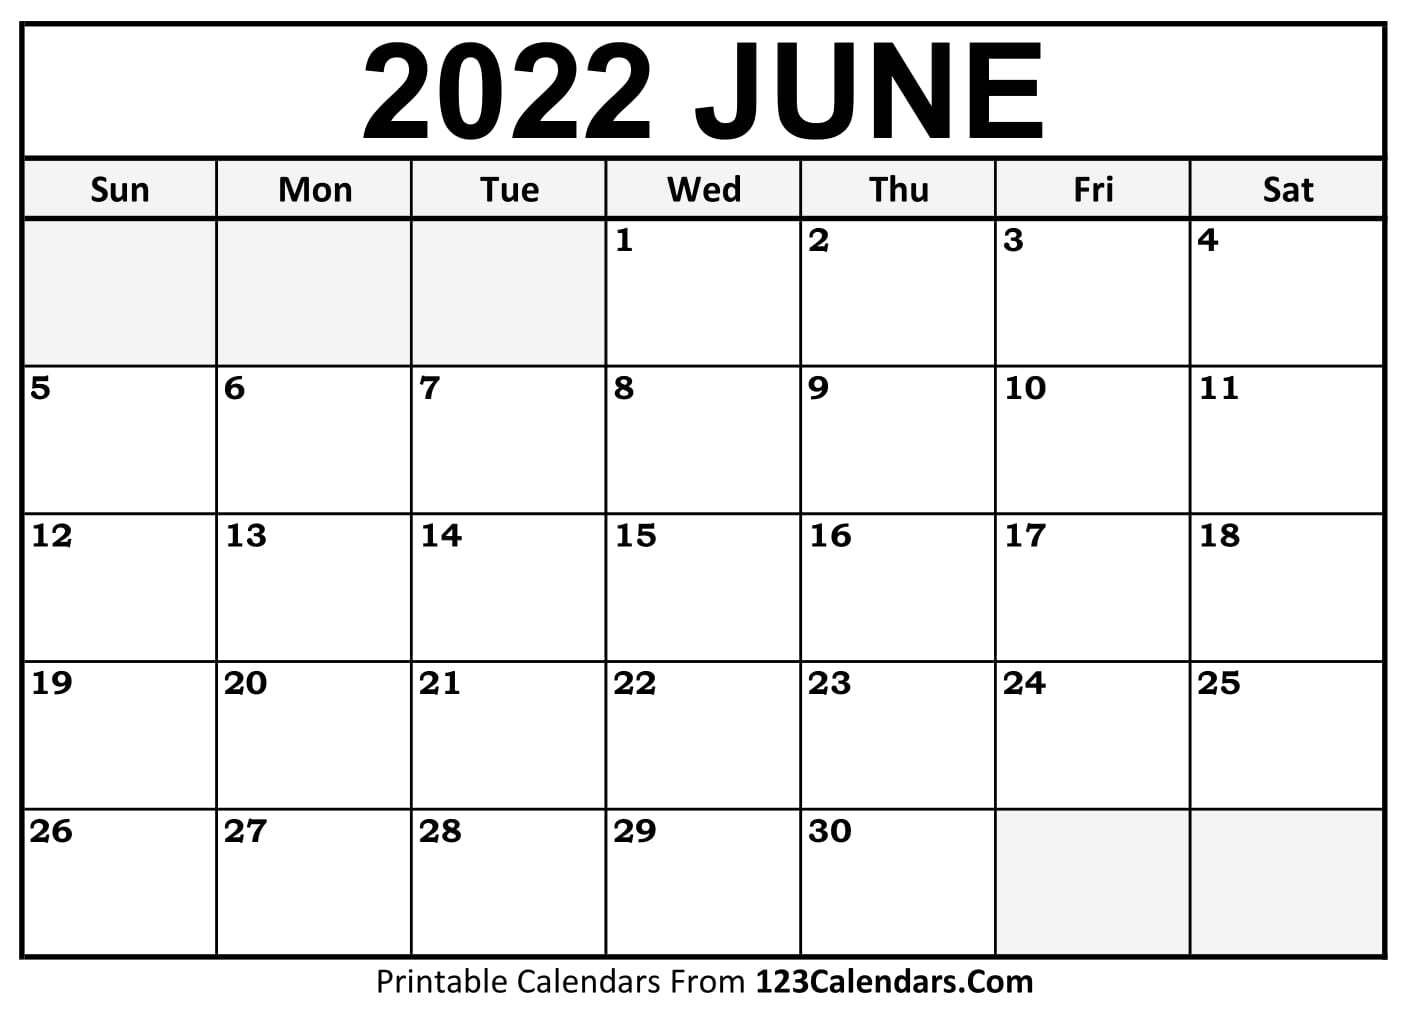 Pdf Calendar June 2022 Printable June 2022 Calendar Templates - 123Calendars.com